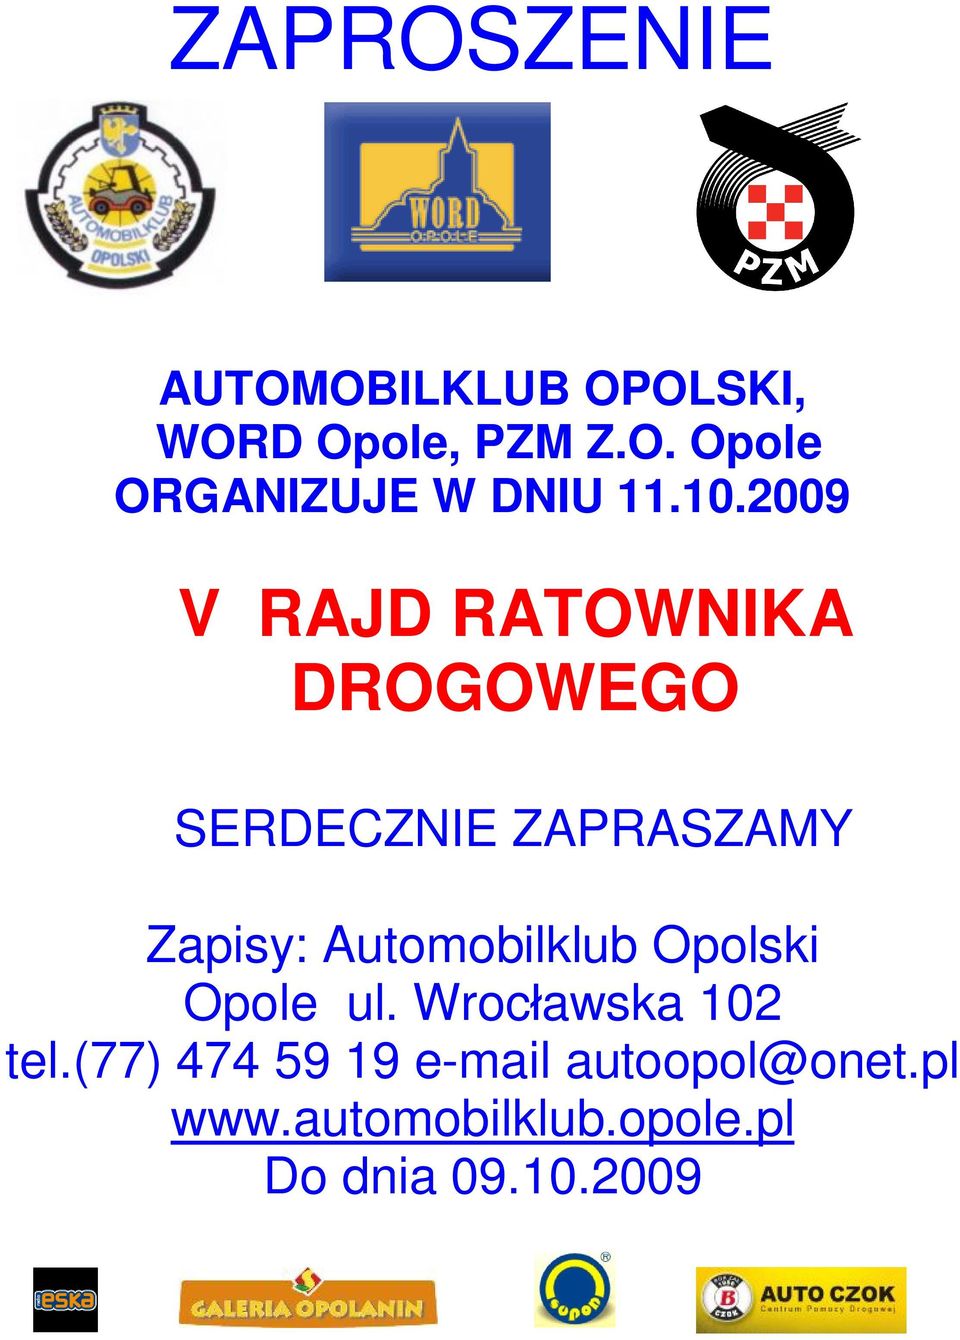 Automobilklub Opolski Opole ul. Wrocławska 102 tel.